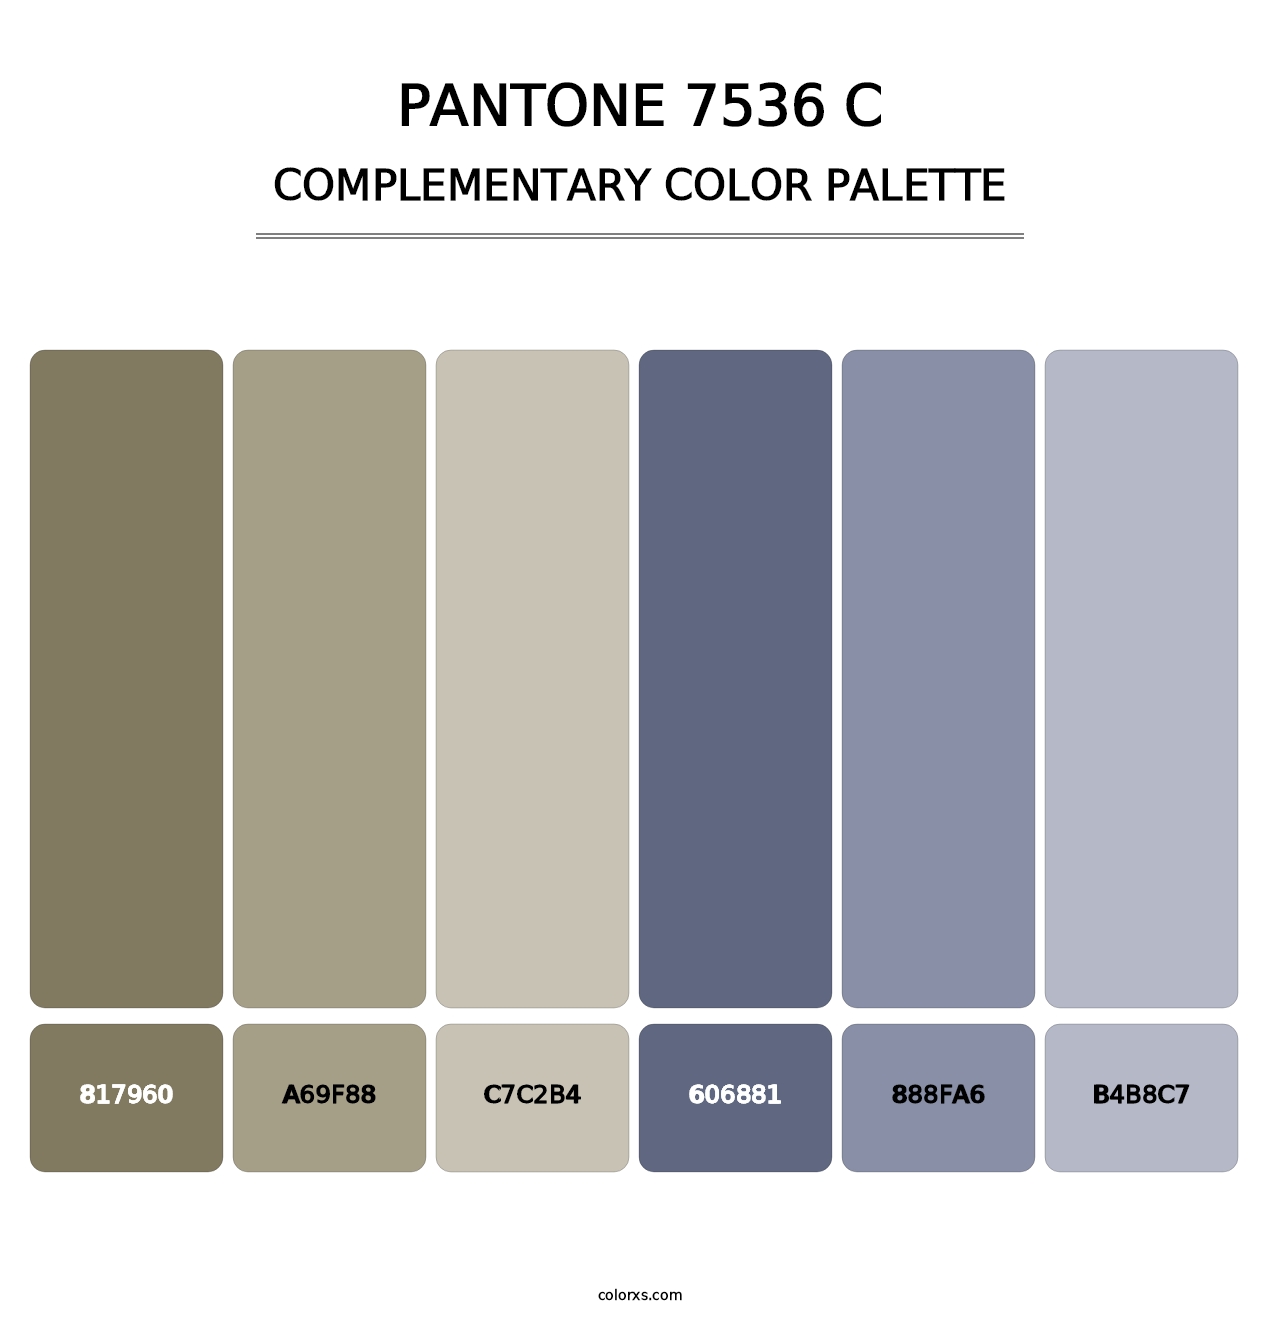 PANTONE 7536 C - Complementary Color Palette